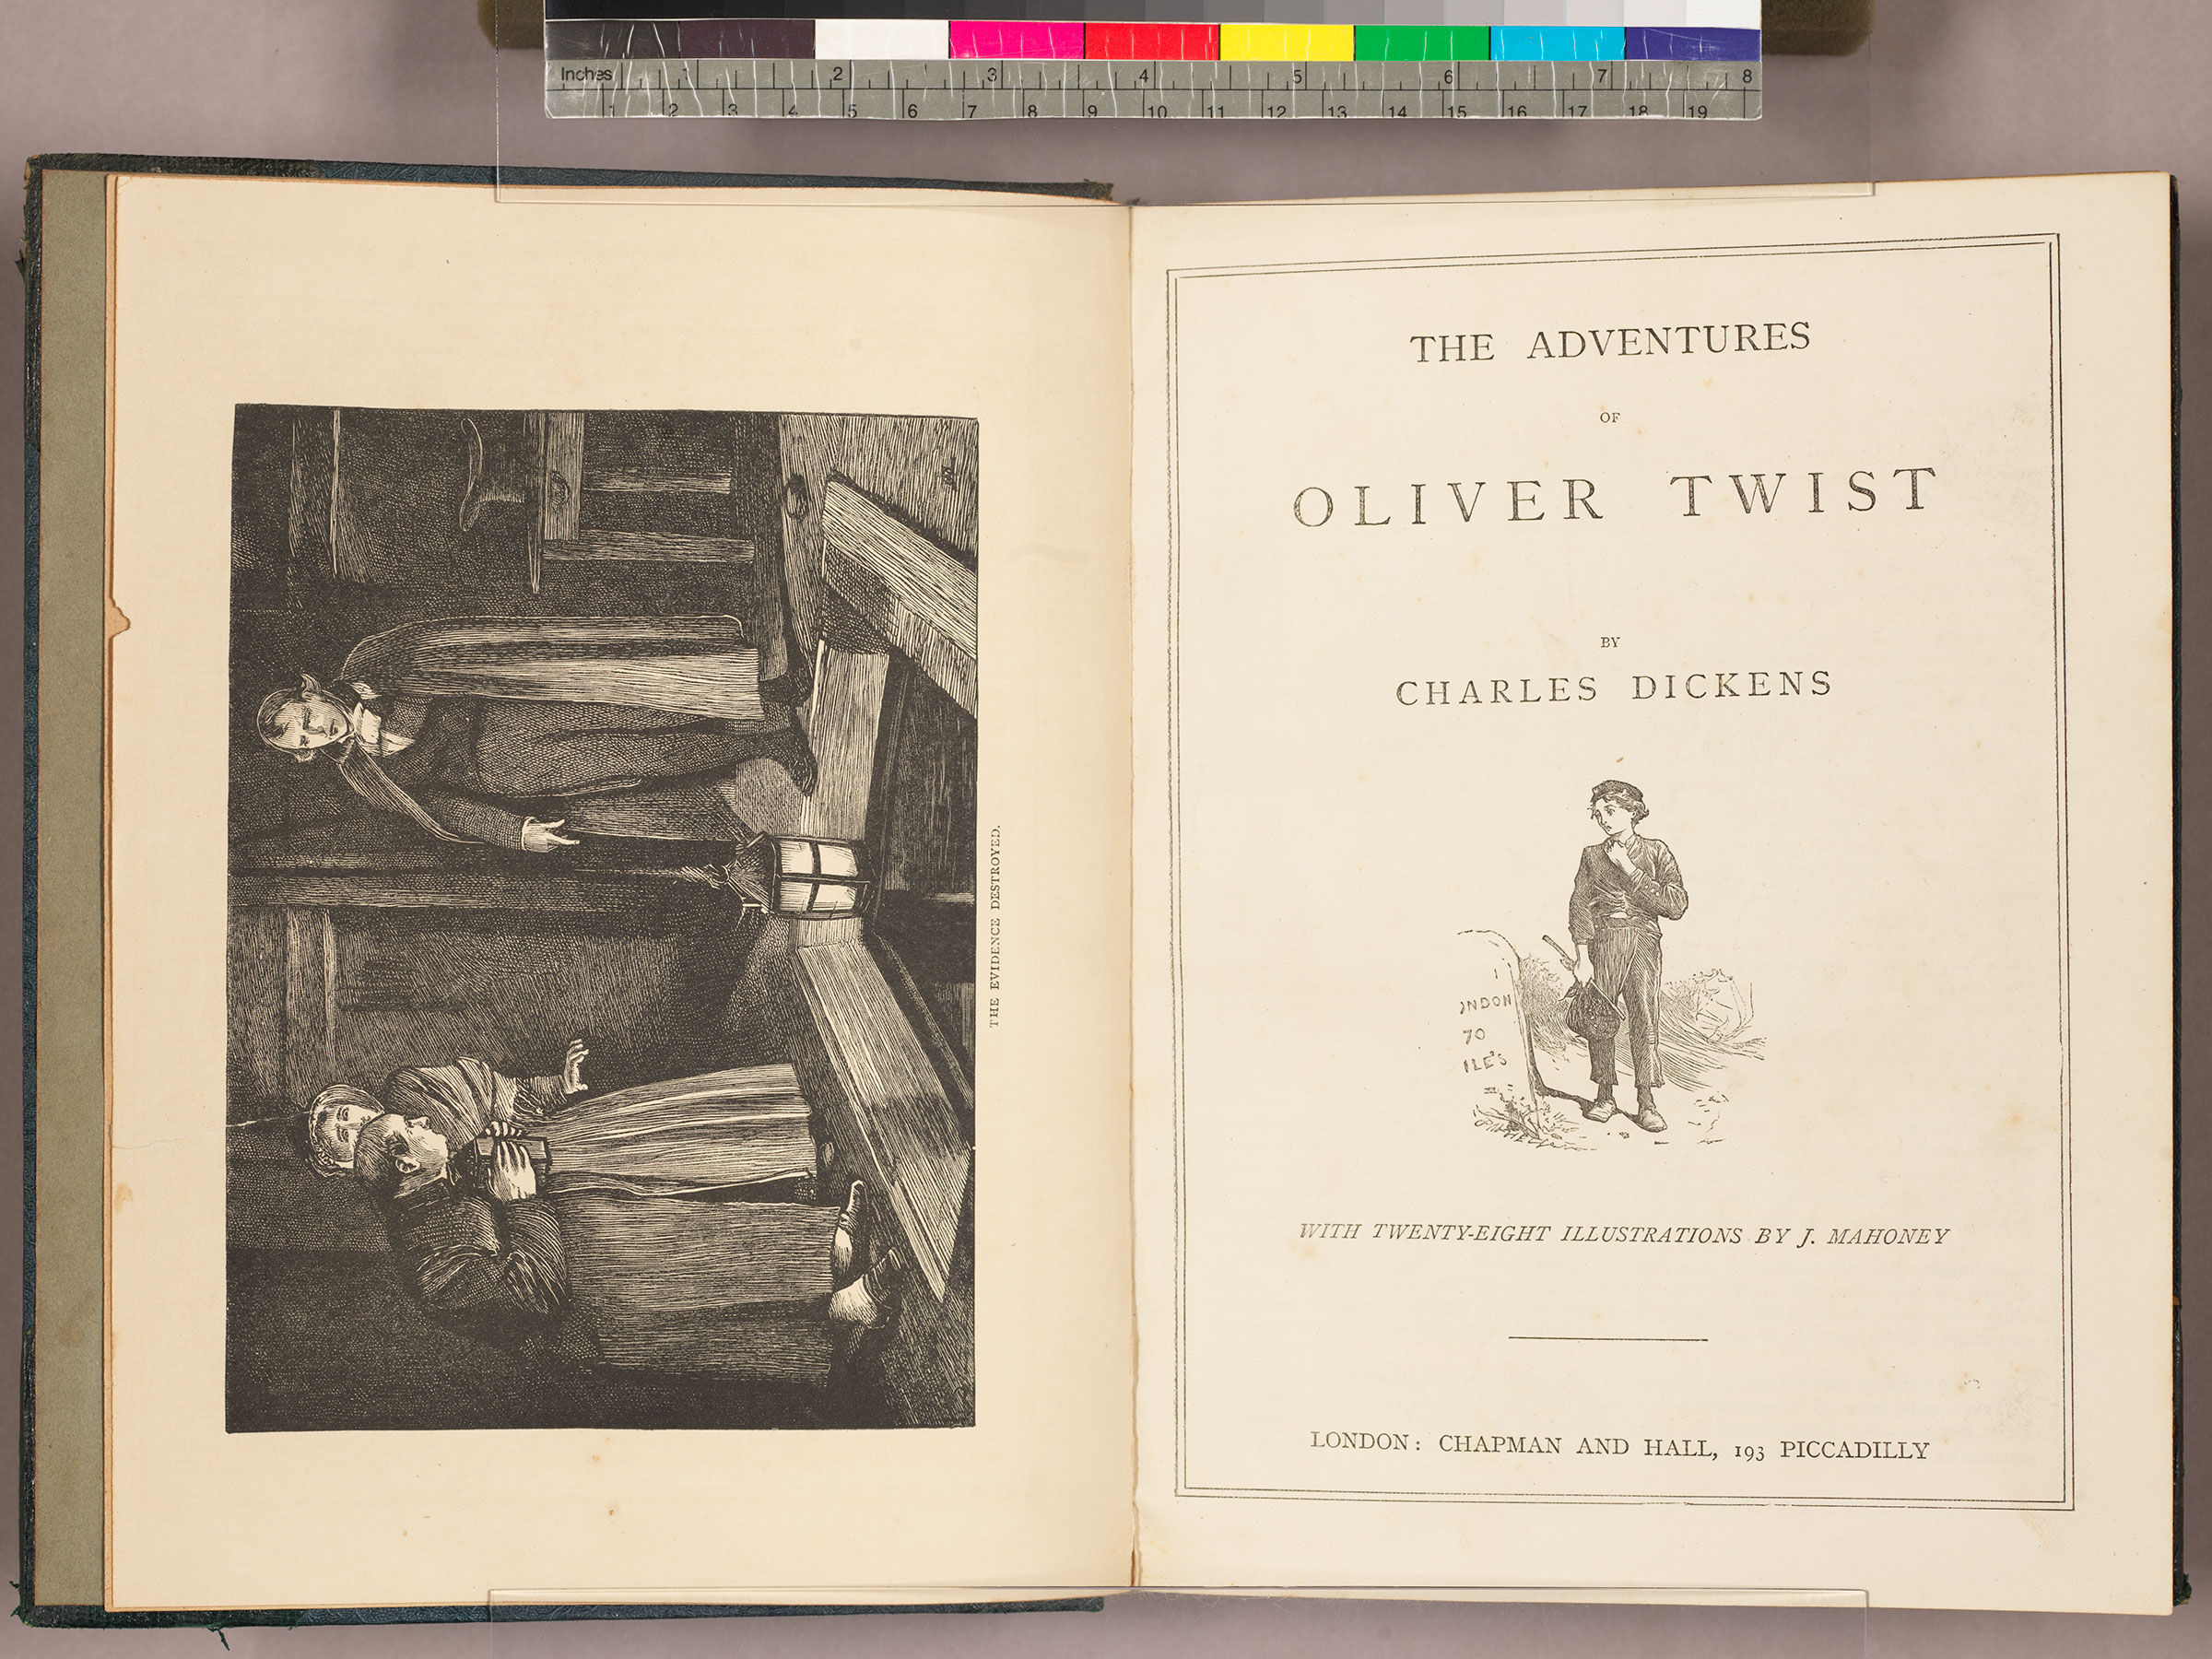 Oliver Twist: With original illustrations (Paperback)